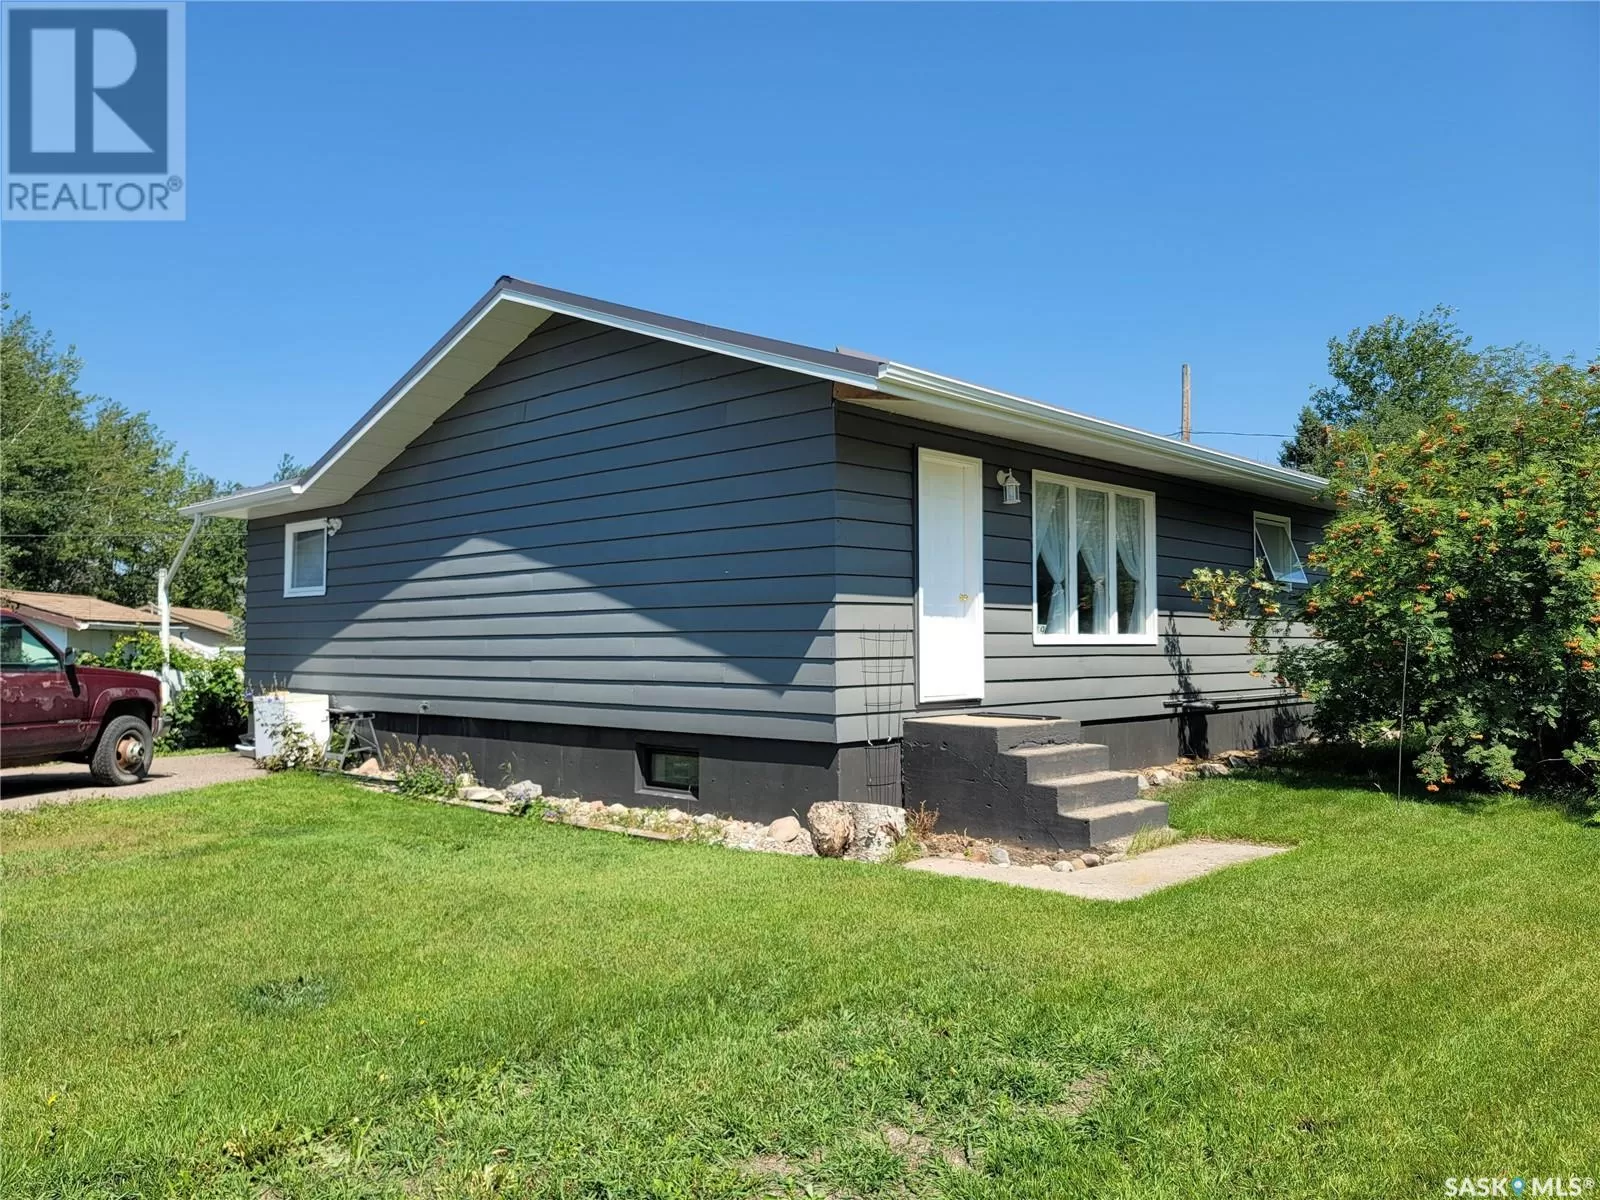 House for rent: 619 Loon Crescent, Loon Lake, Saskatchewan S0M 1L0